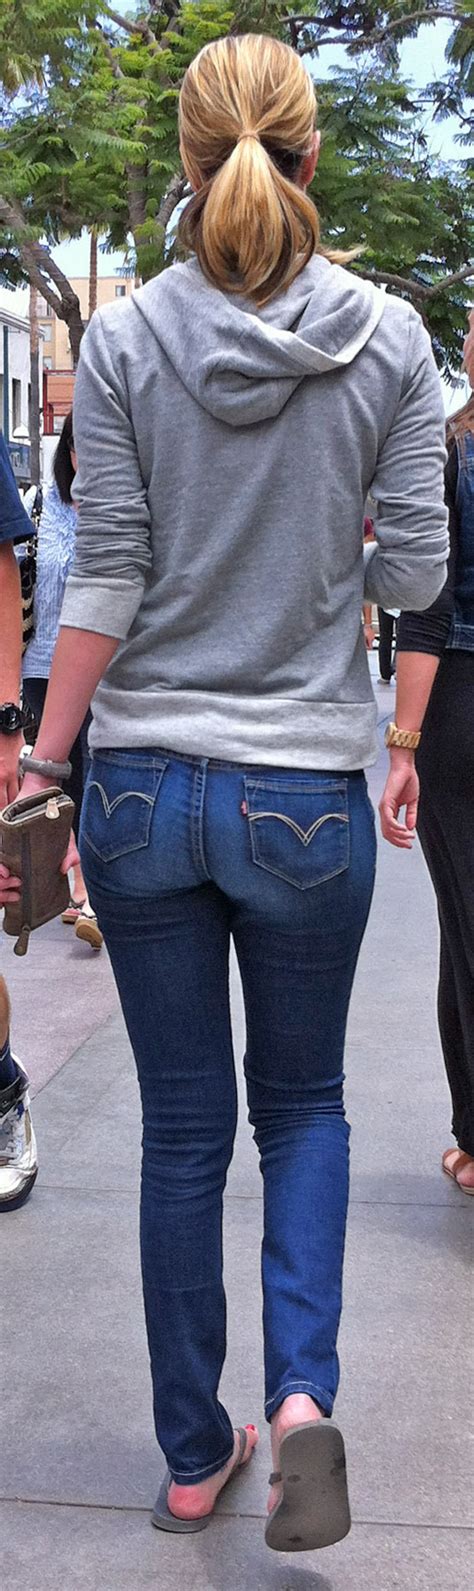 Peepforum Threads Bubble Butt On Skinny Blonde In Tight Jeans